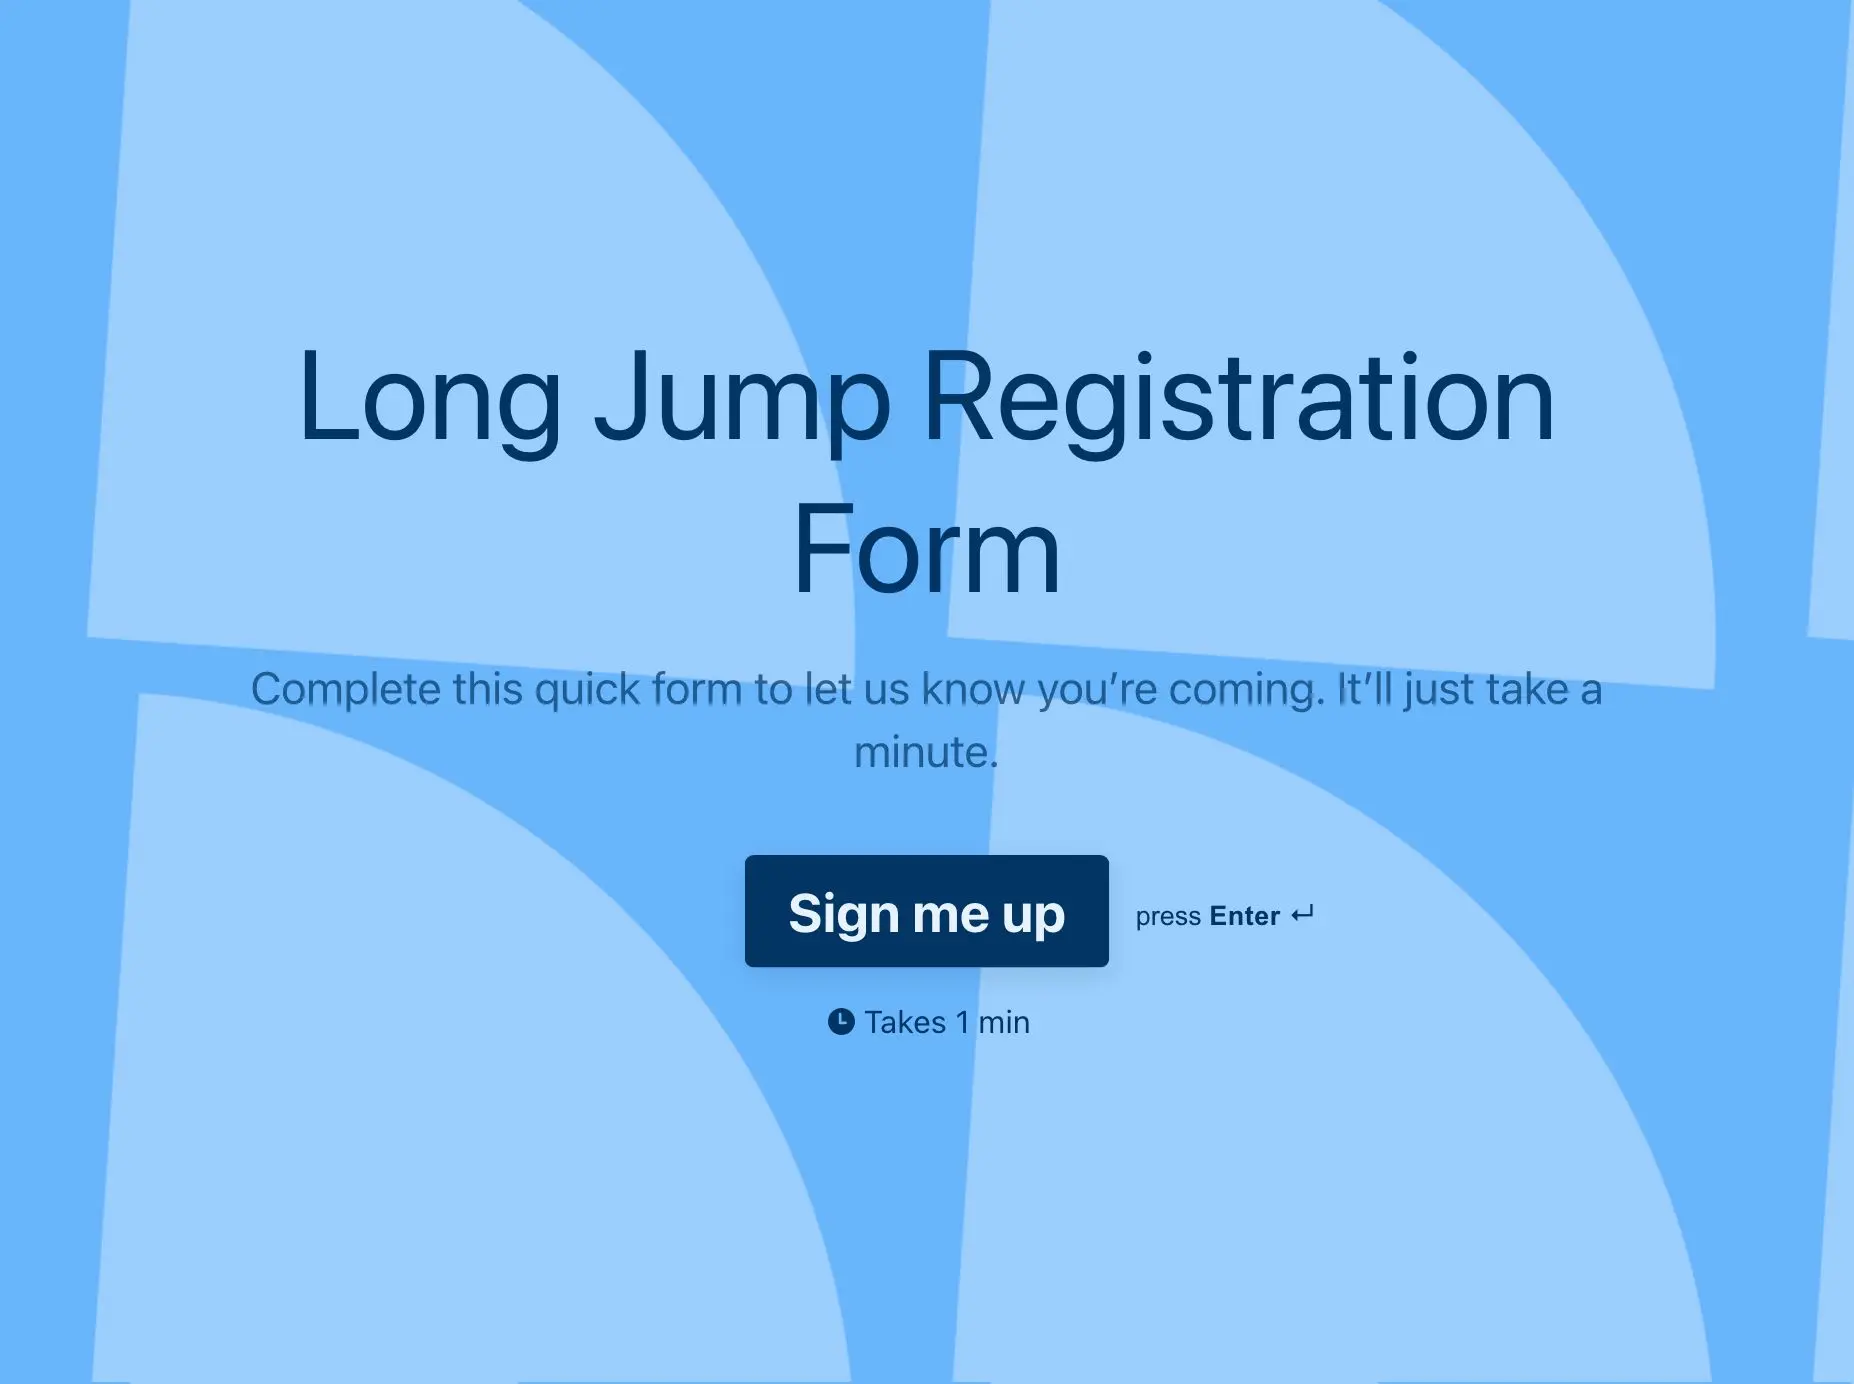 Long Jump Registration Form Template Hero